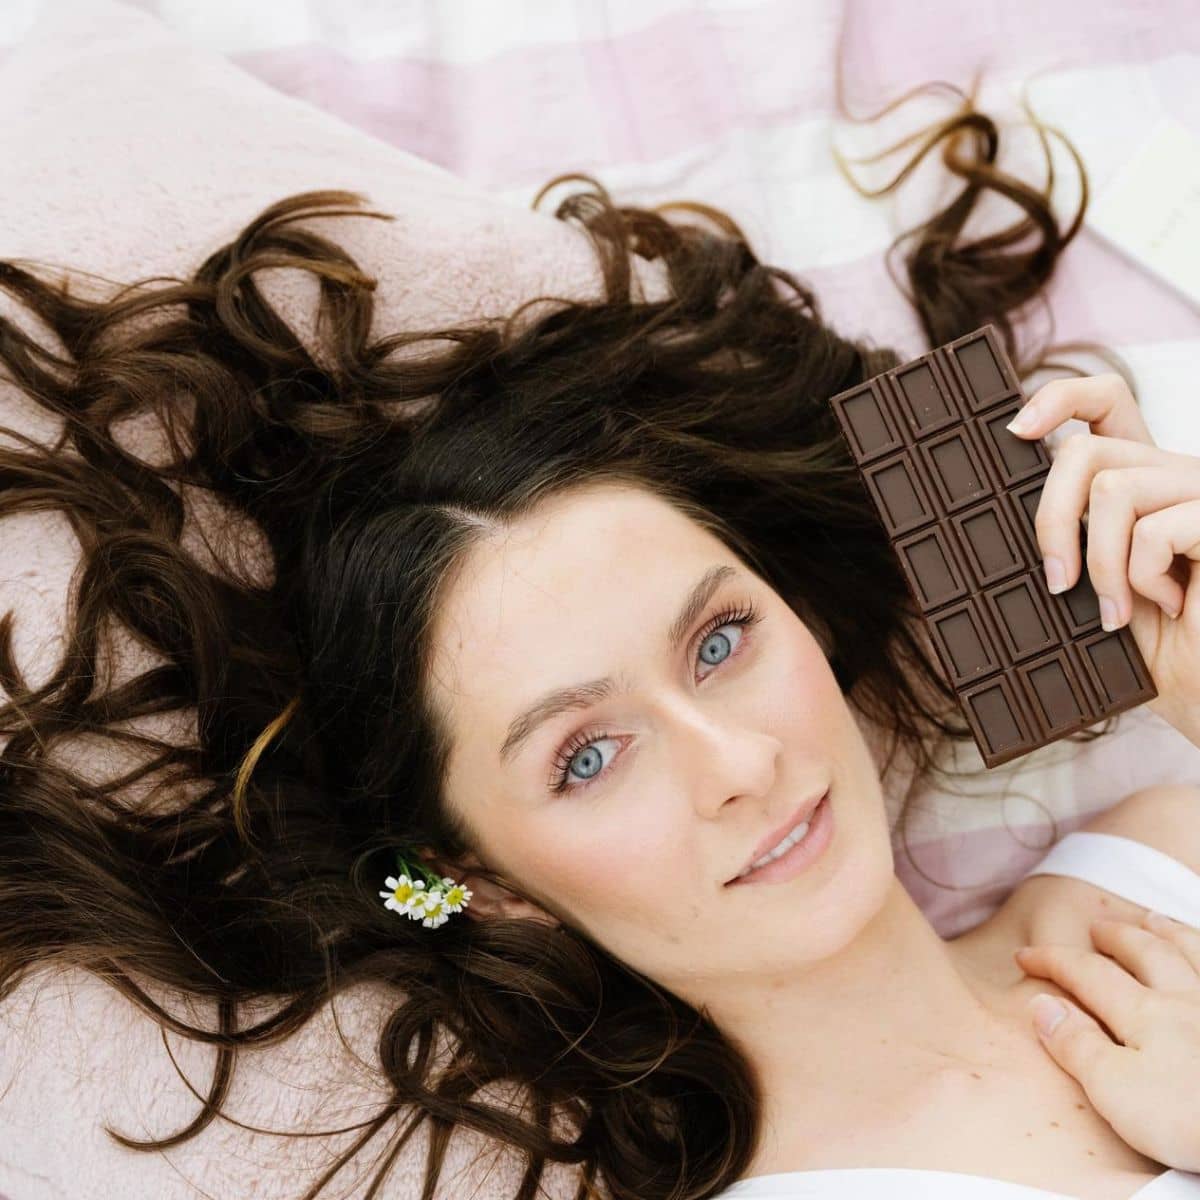 Bare Self - Pregnancy Chocolate